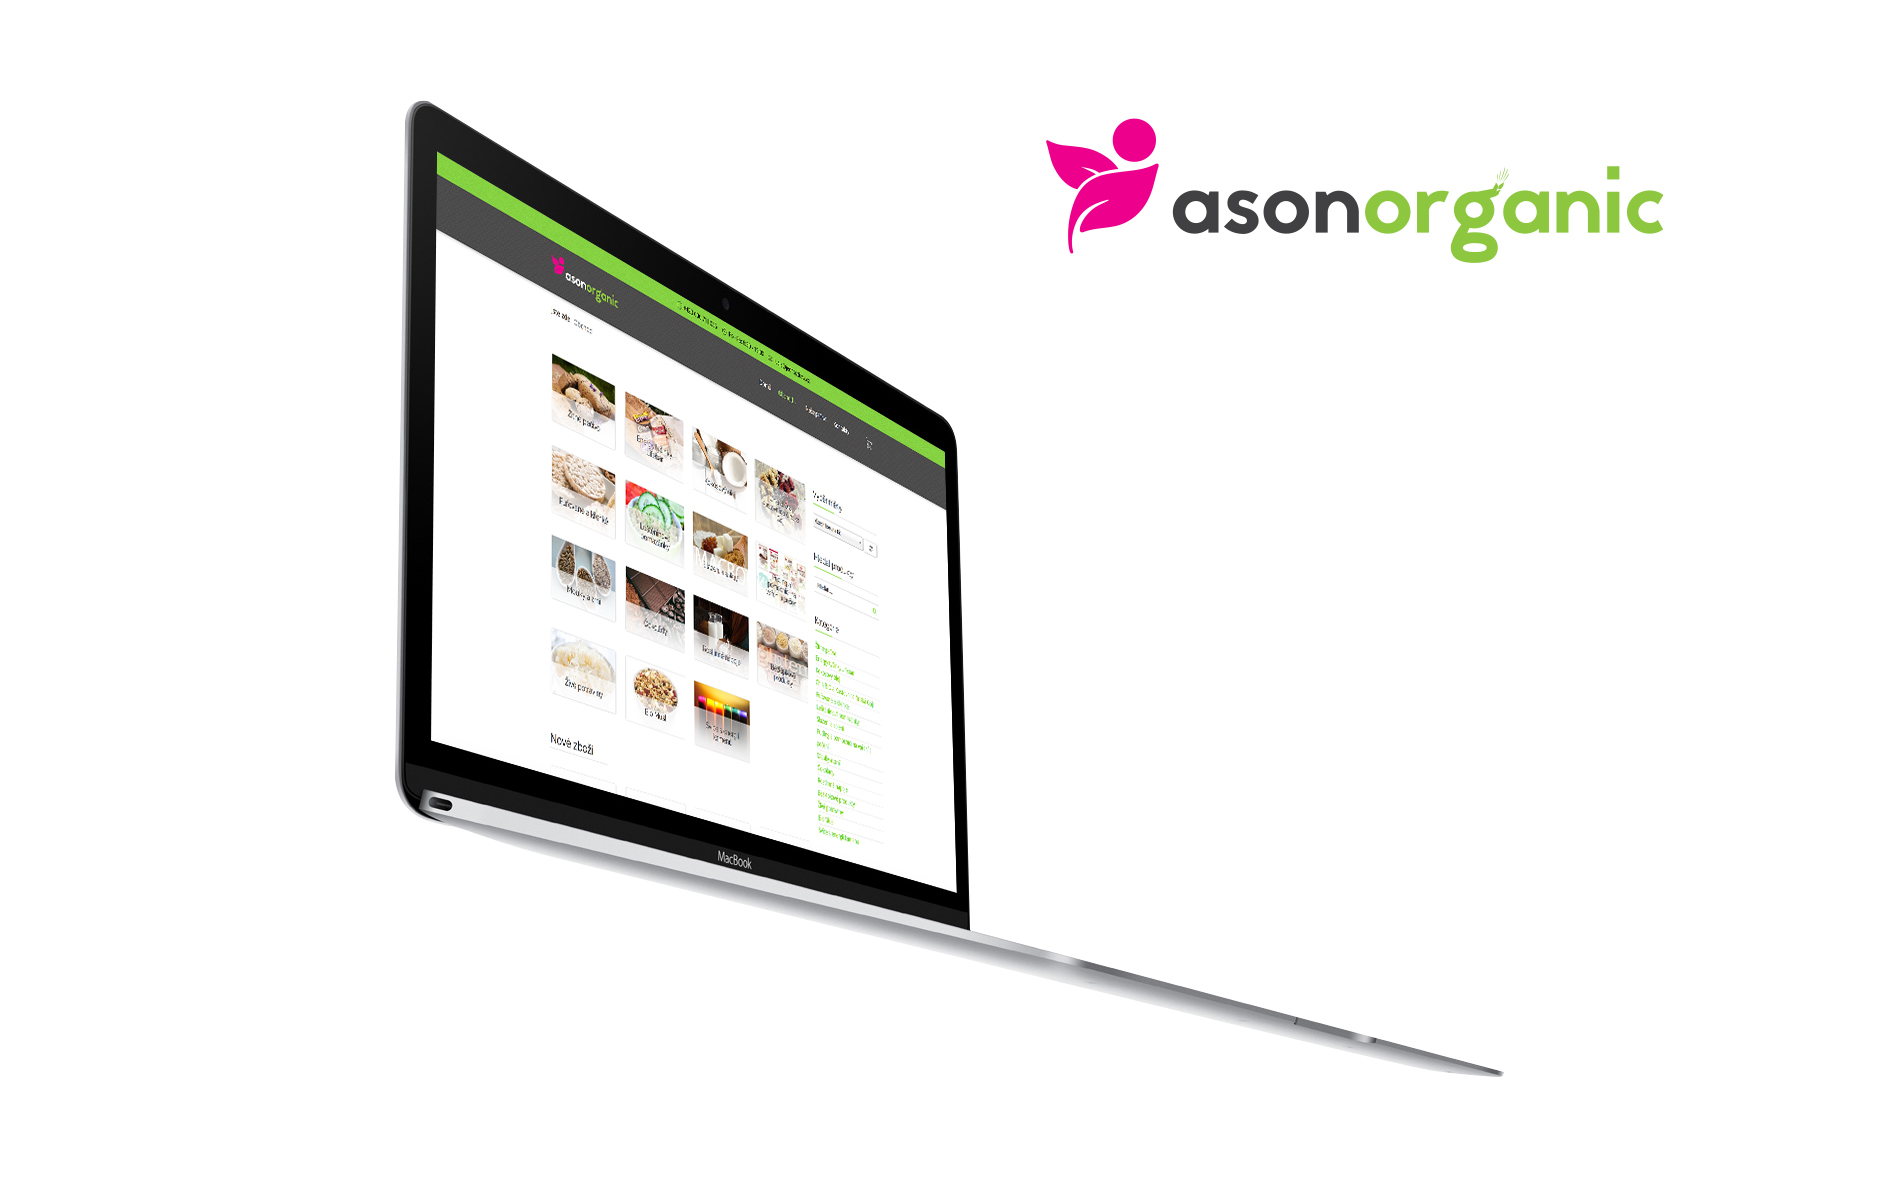 Asonorganic webdesign and logo design